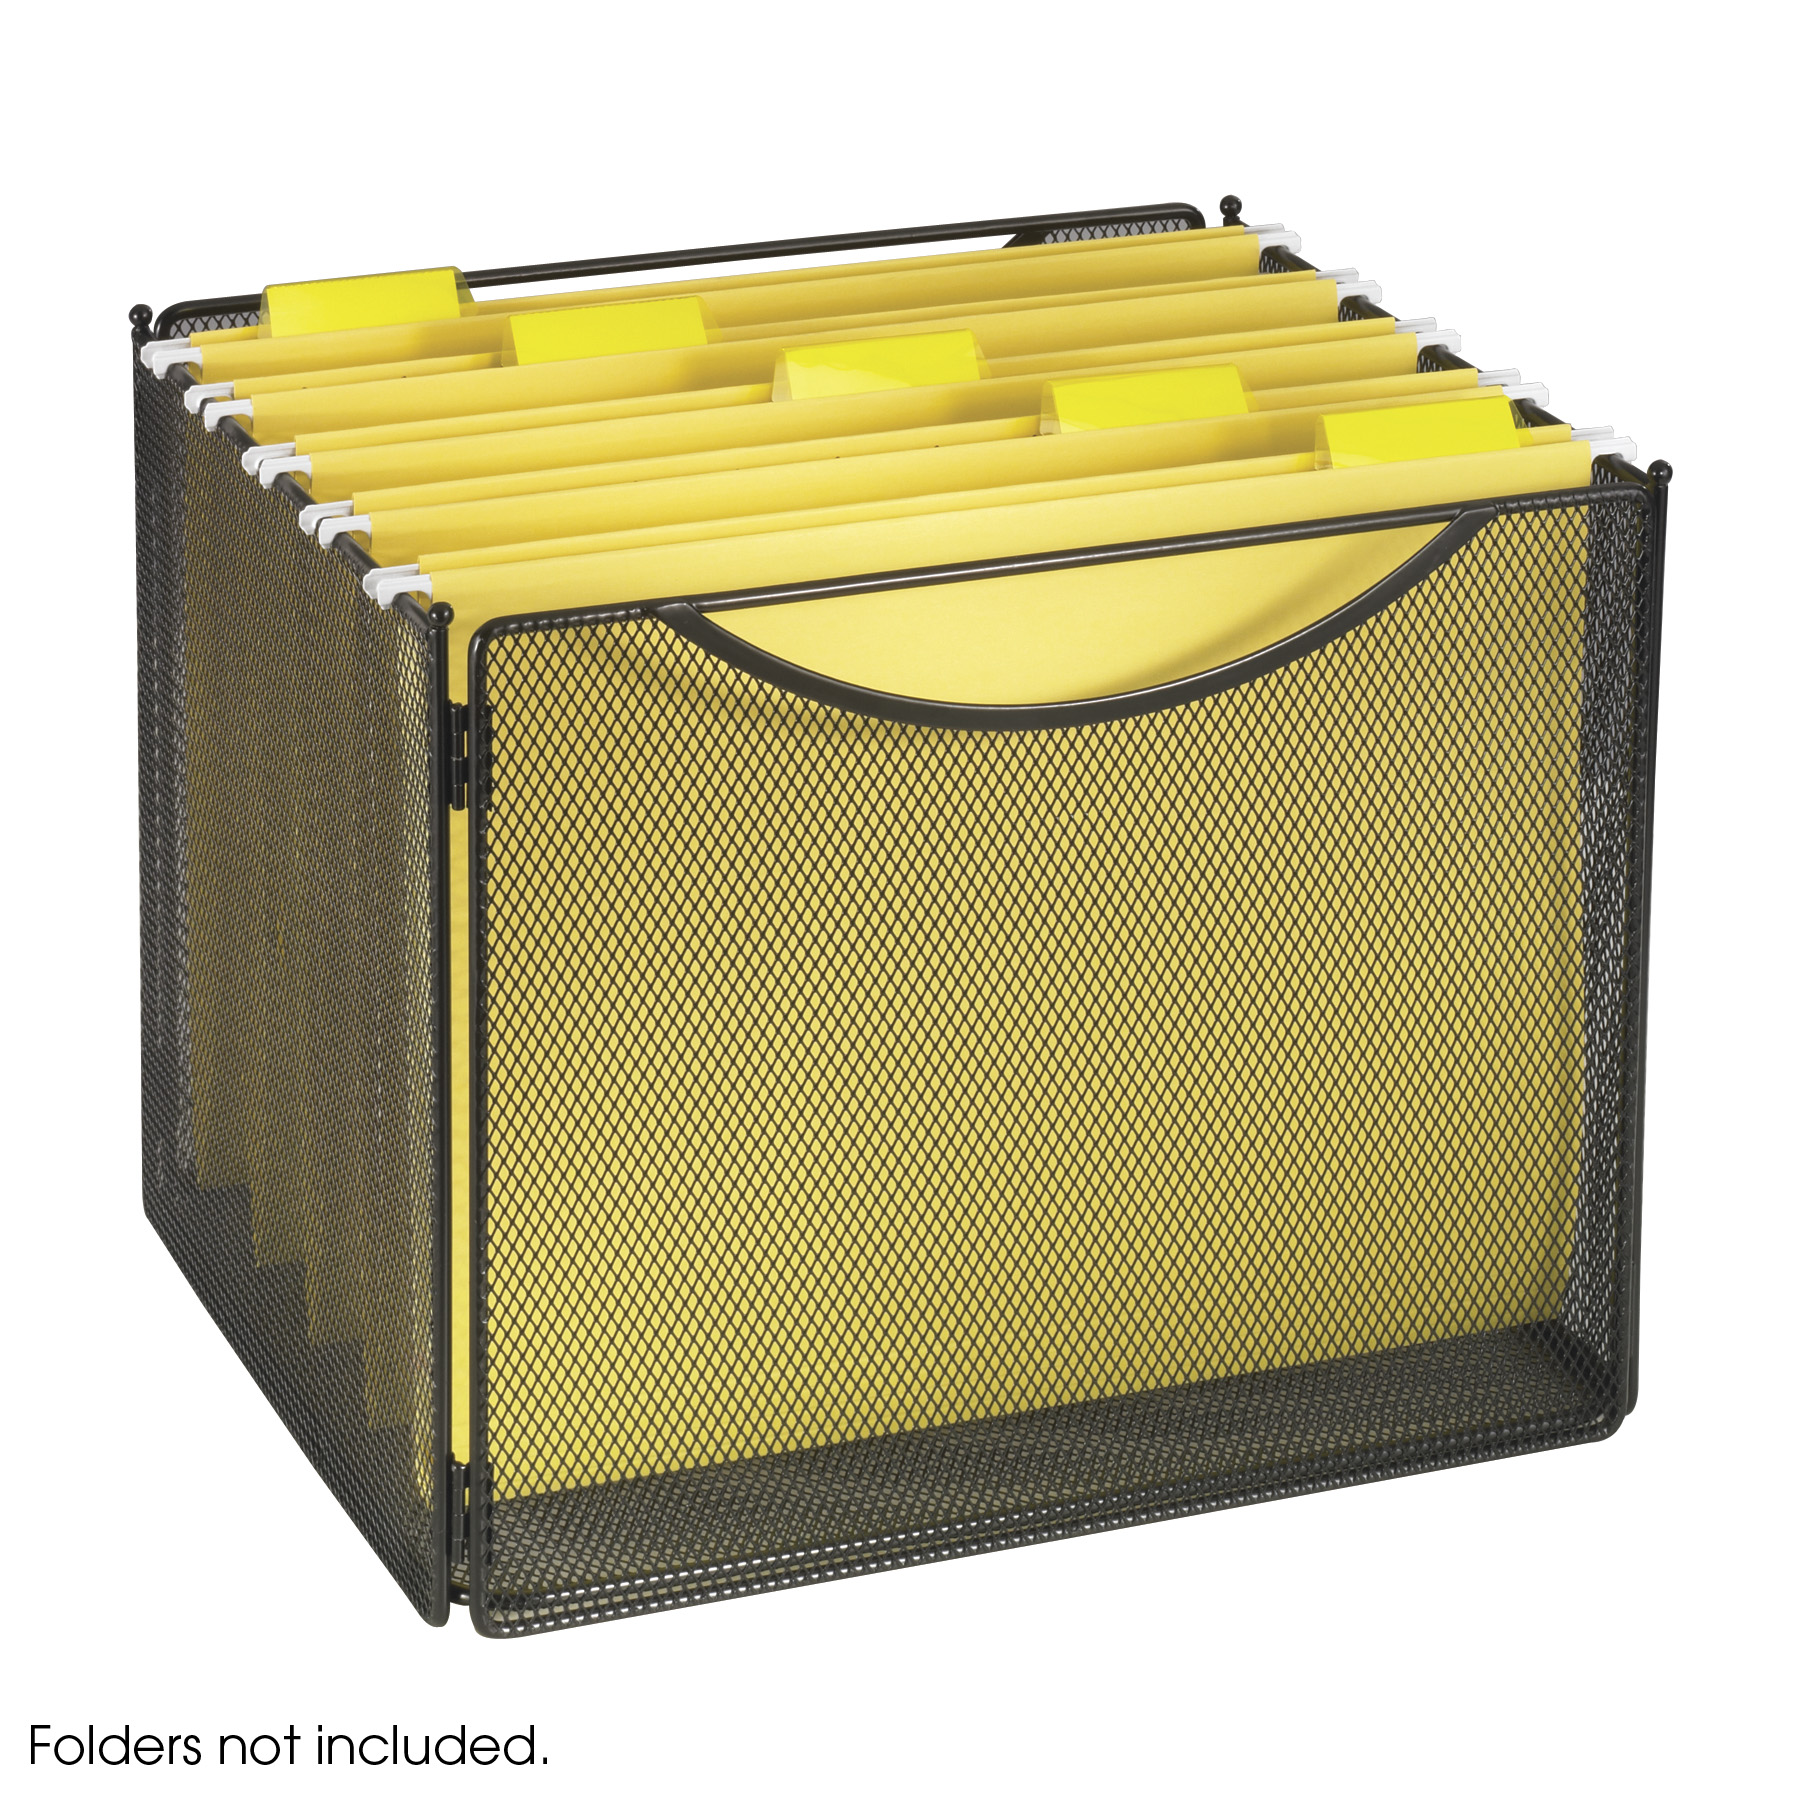 Desktop Plastic 12 Compartments Detachable Sundry Candy Holder Storage Box  Case - Clear - 7.7 x 5.1 x 1.4(L*W*H) - Bed Bath & Beyond - 18679575